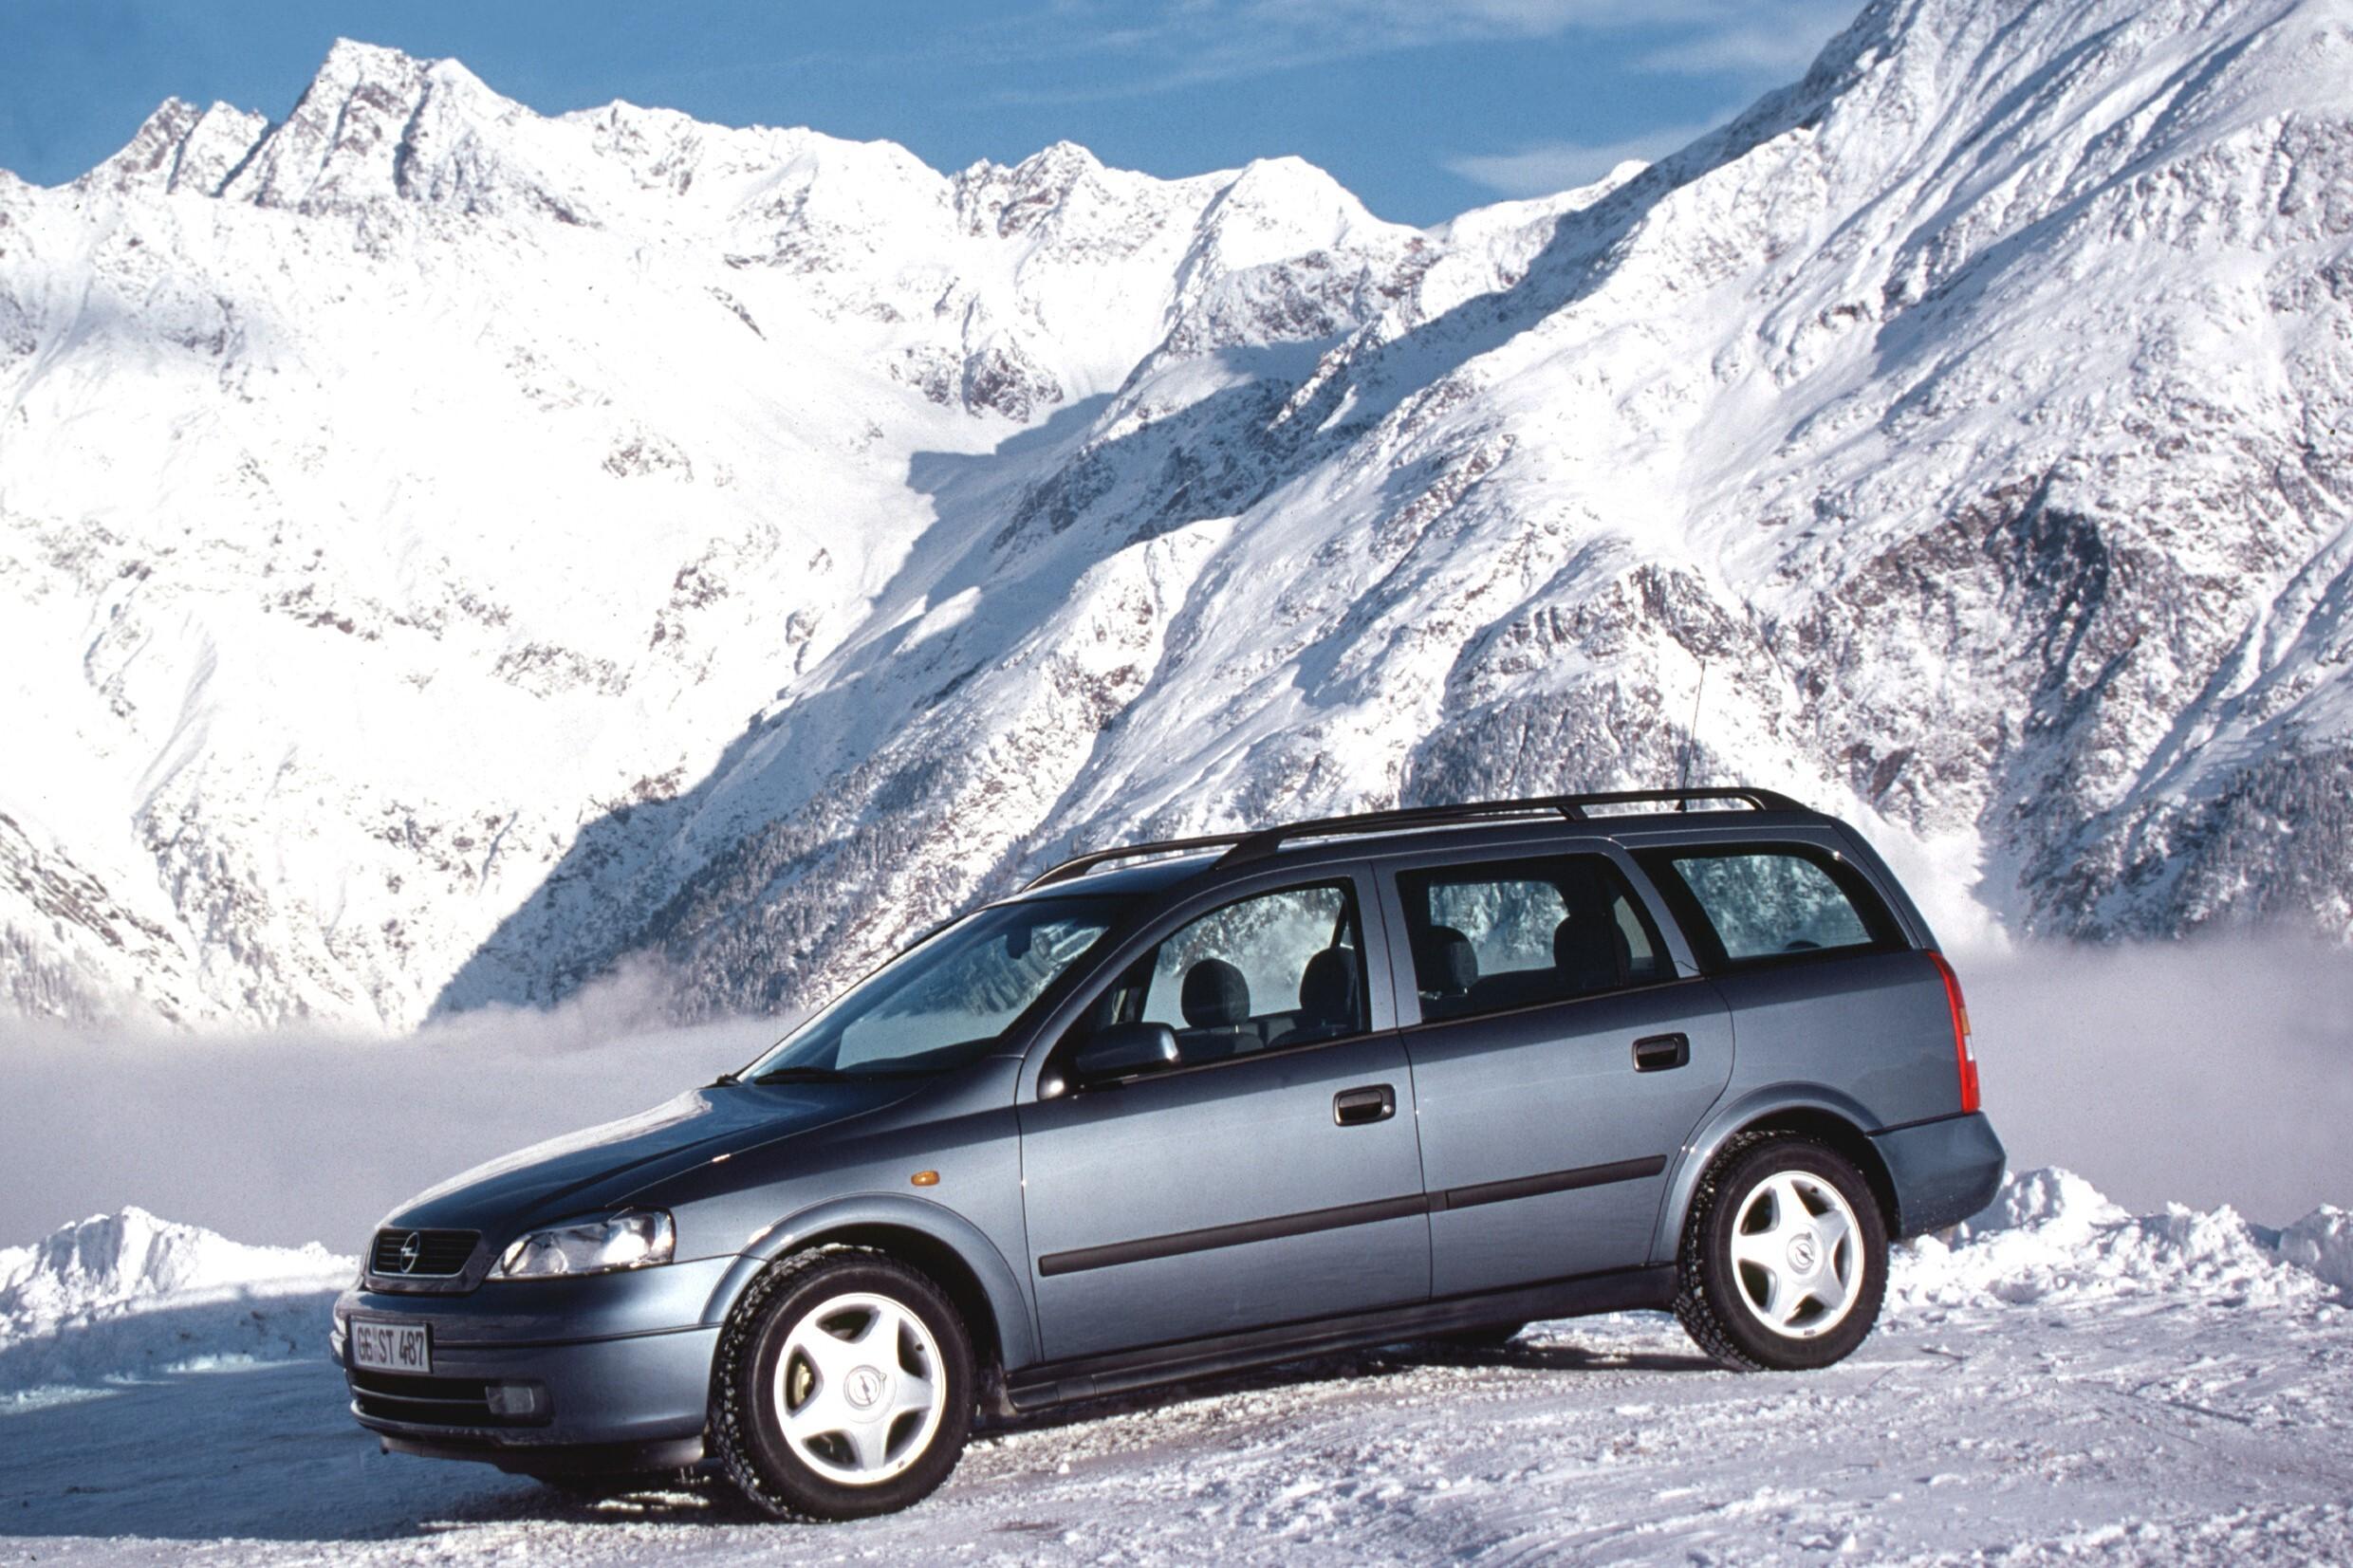 Джой караван. Opel Astra g 1998 универсал. Opel Astra Caravan 1998. Opel Astra универсал 1998. Opel Astra g Caravan.